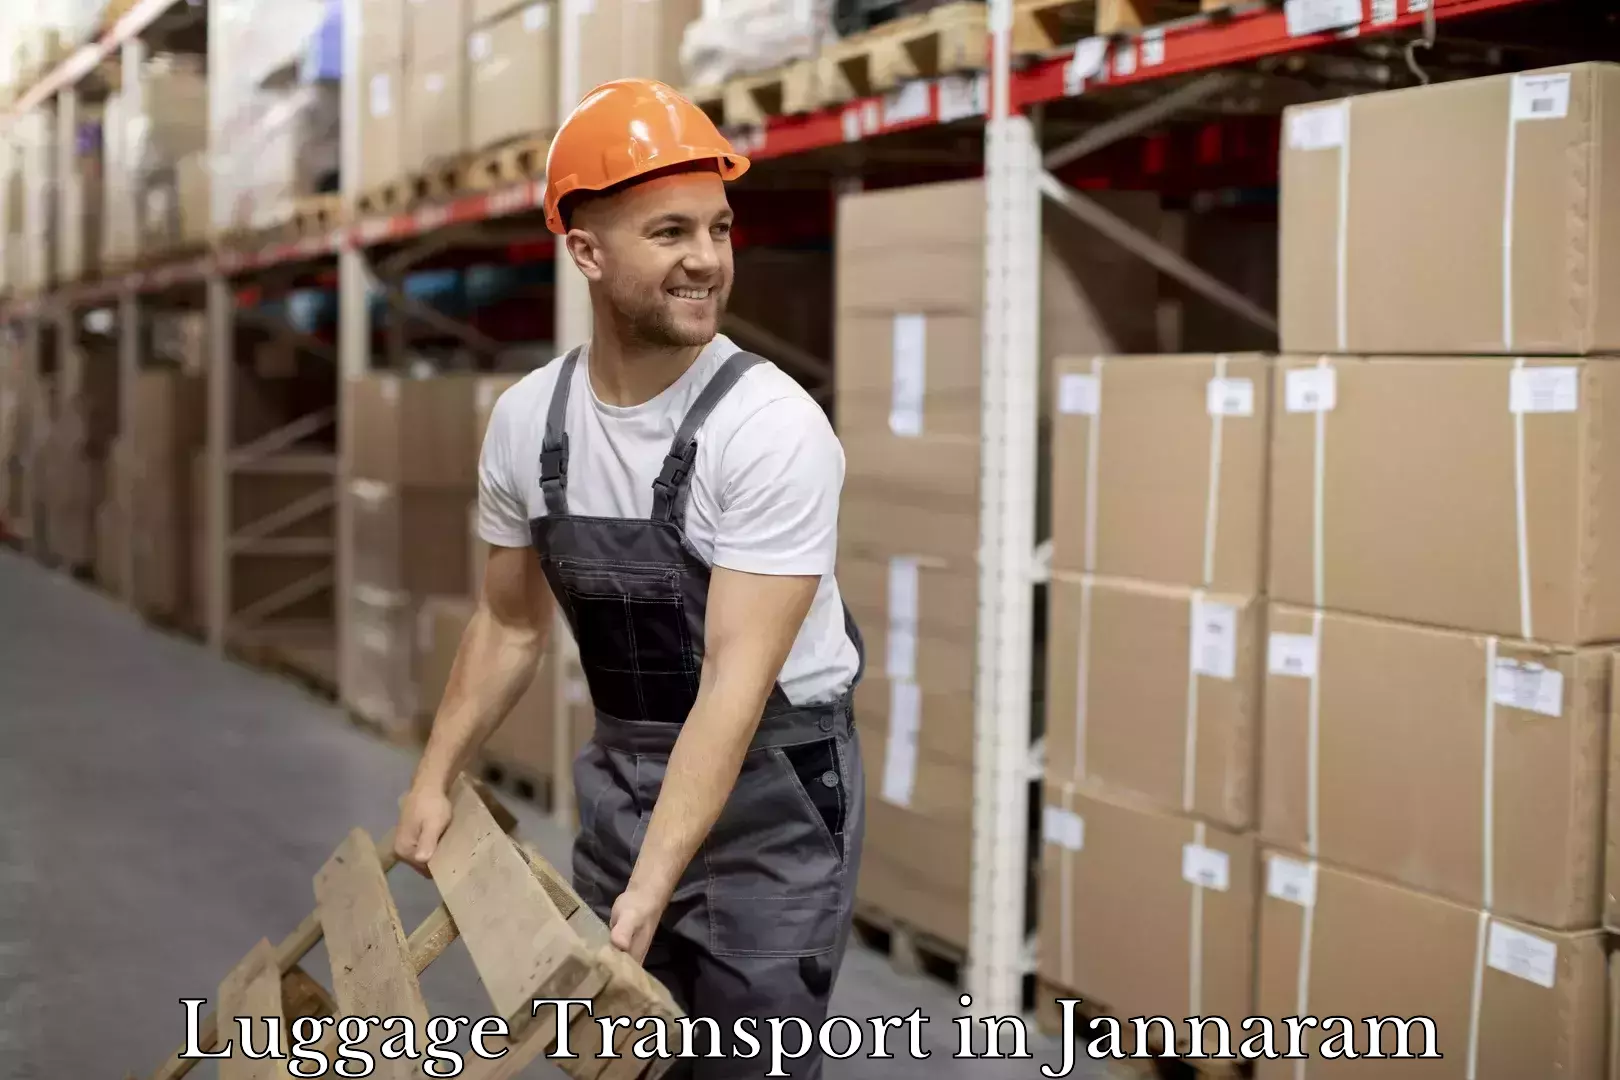 Luggage shipment specialists in Jannaram